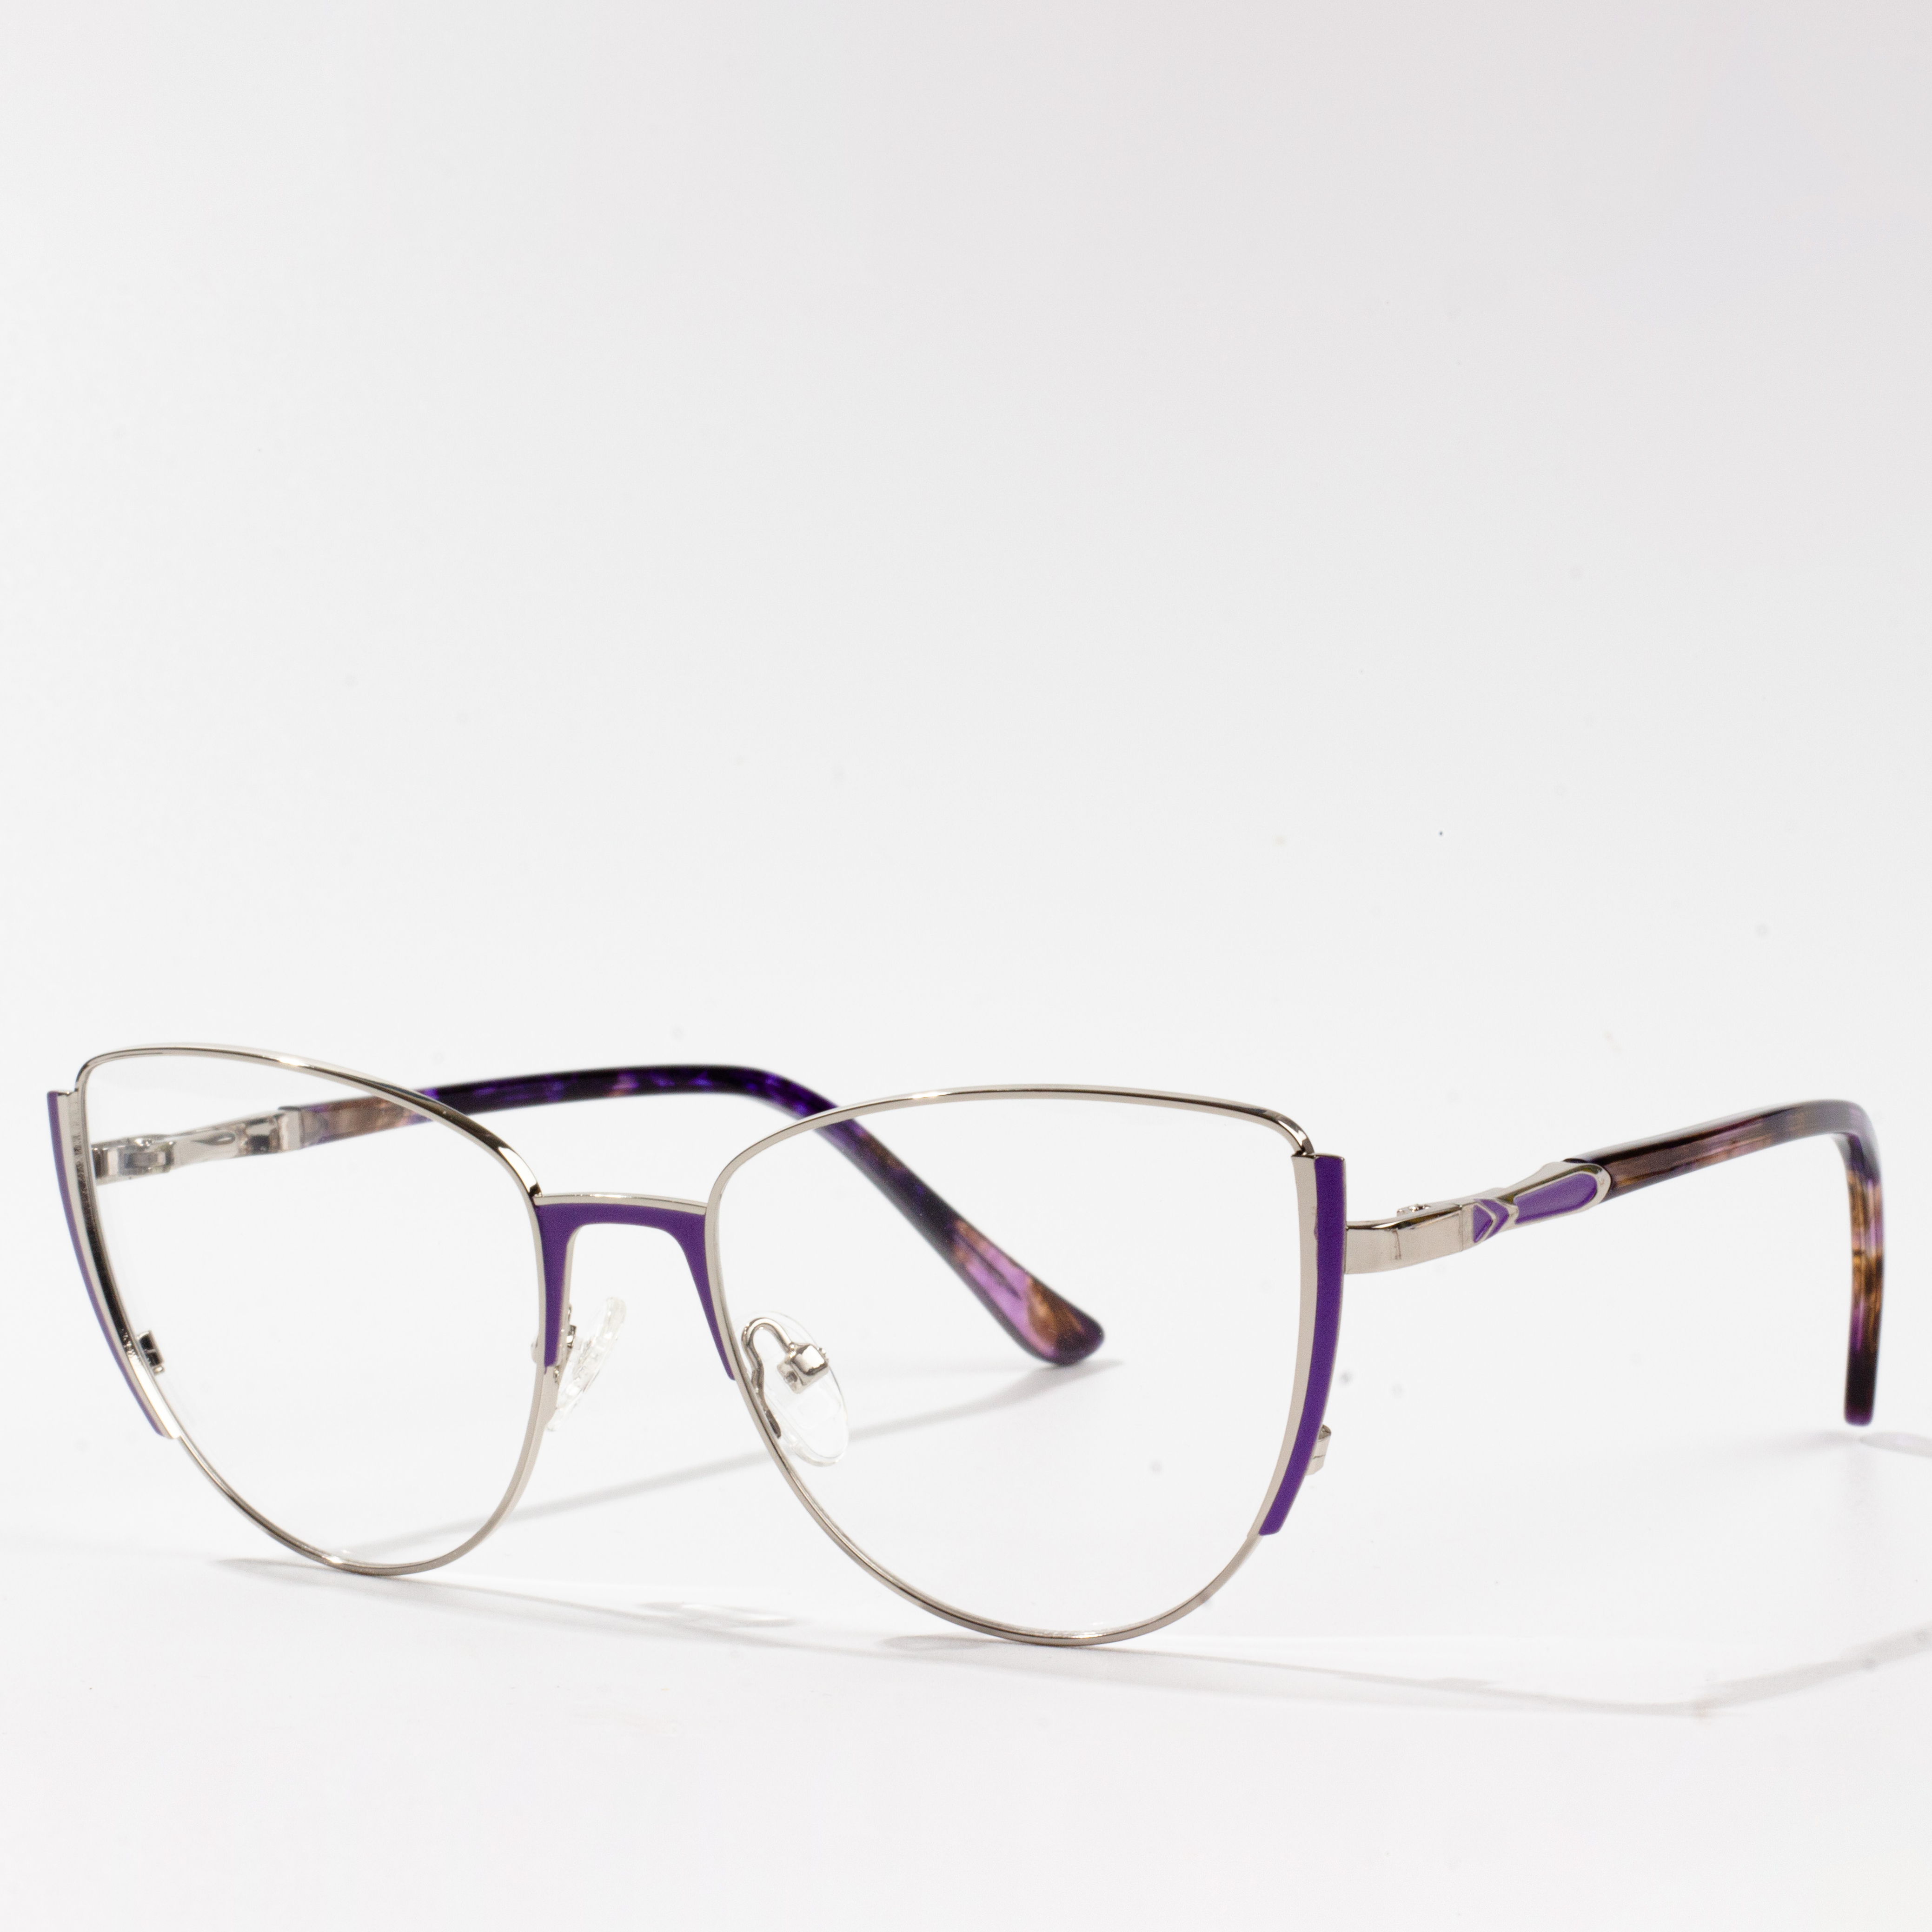 acquista montature per occhiali online